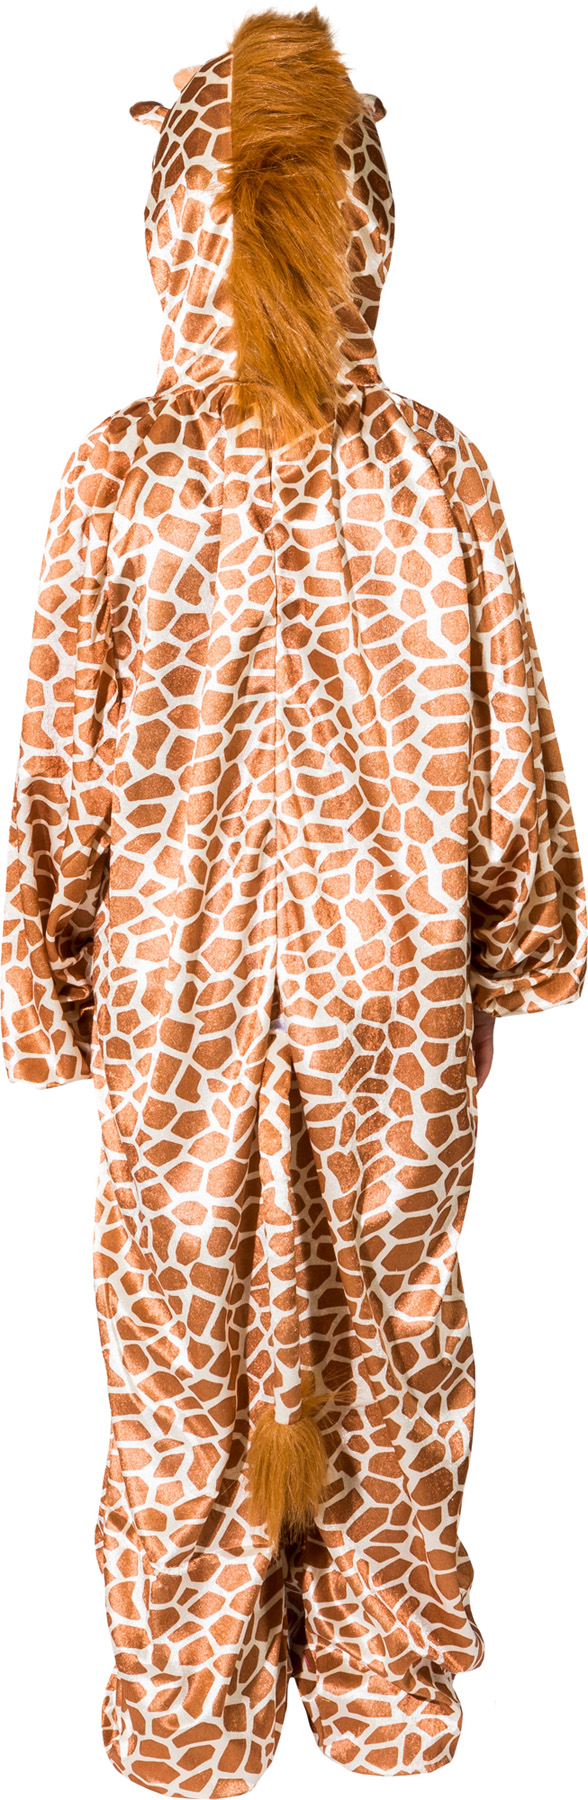 Giraffe Overall 